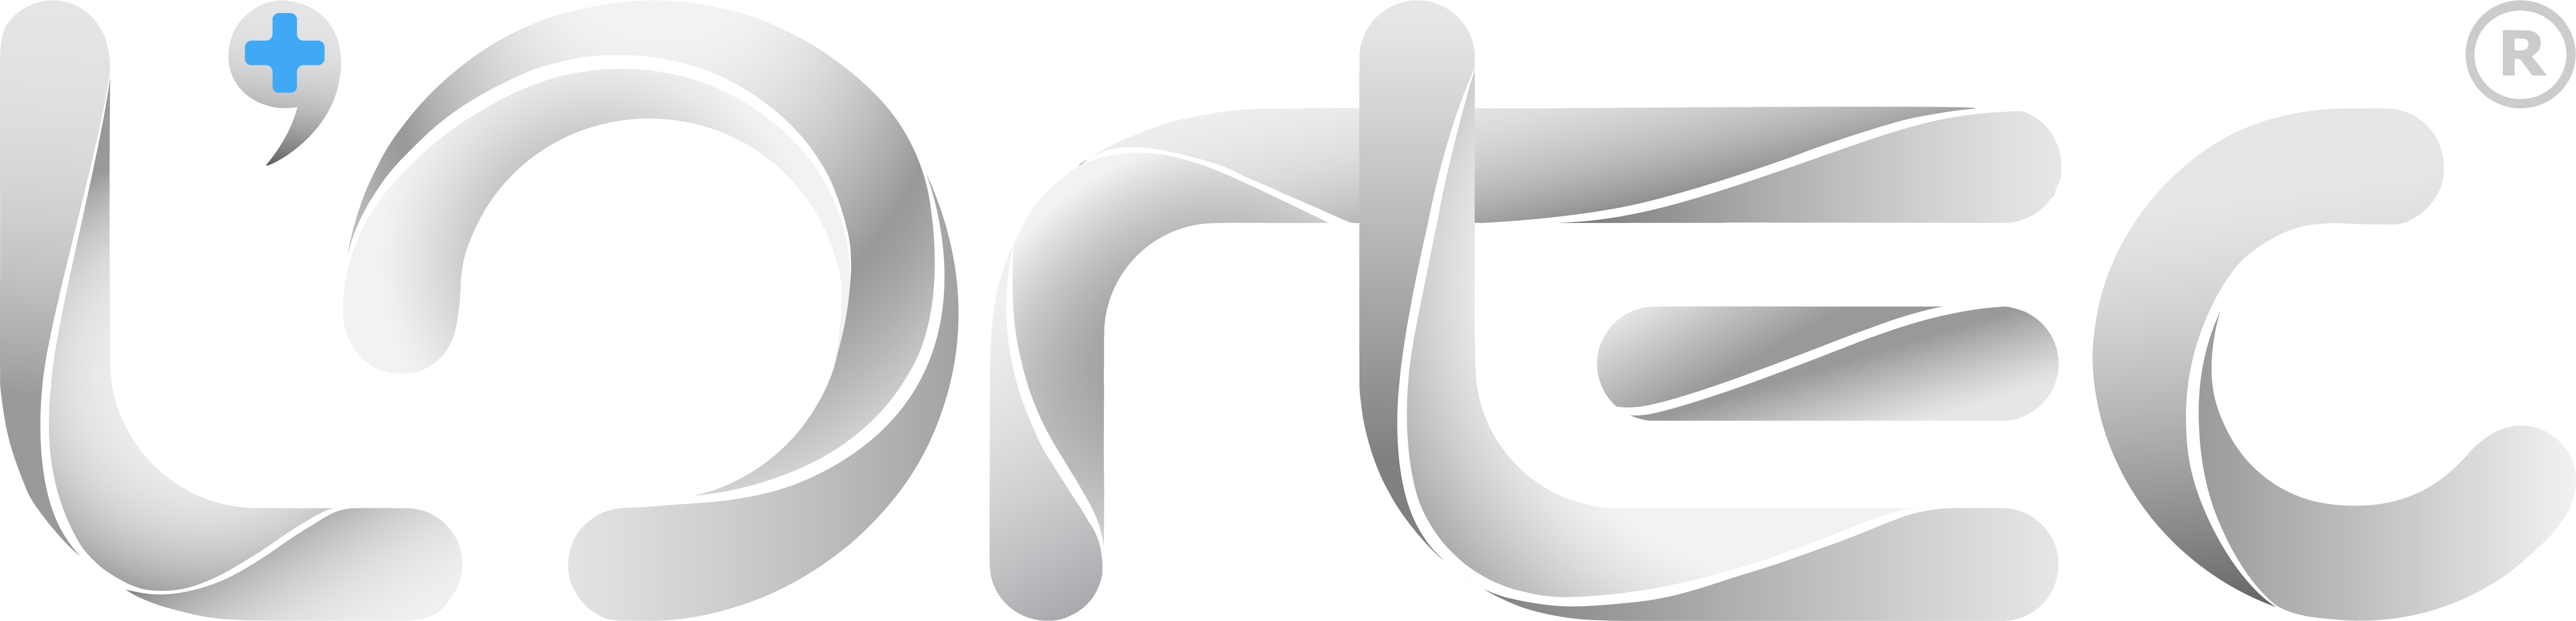 lortec-medical logo ro